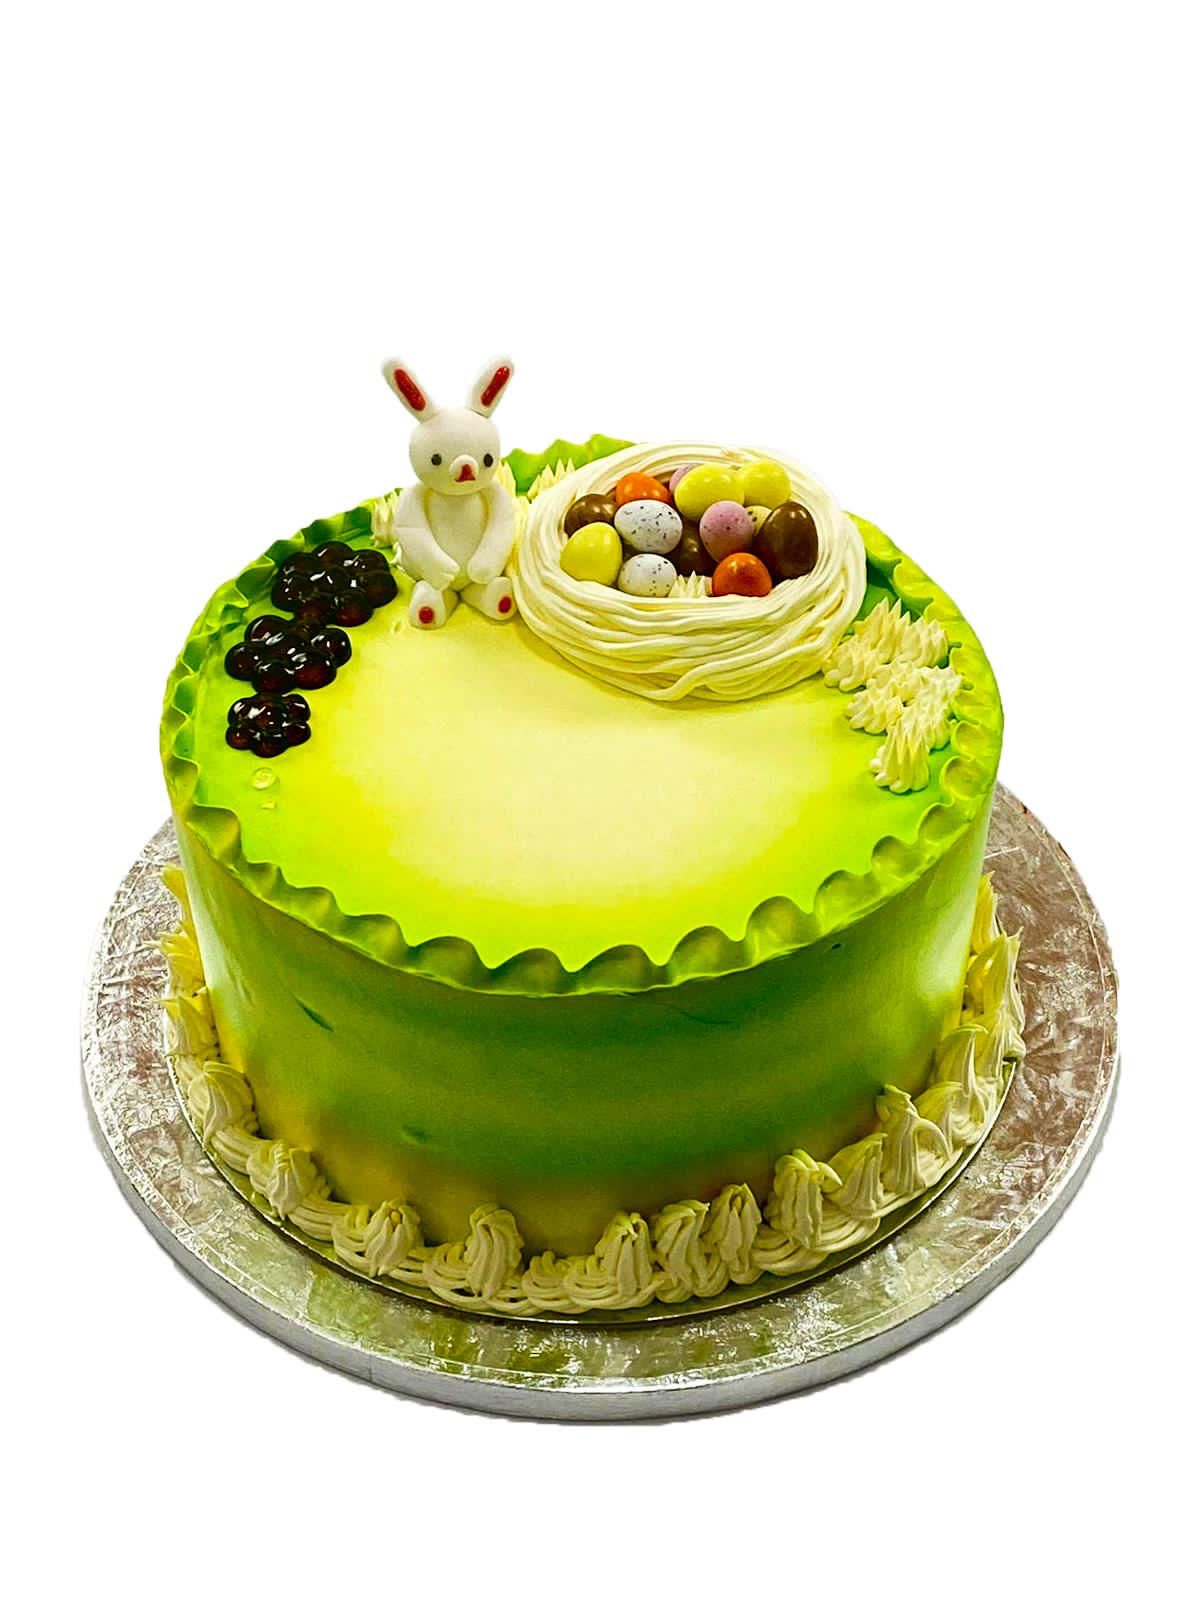 Buy Freshly Baked Easter Bunny Cake Online | Fab Cakes